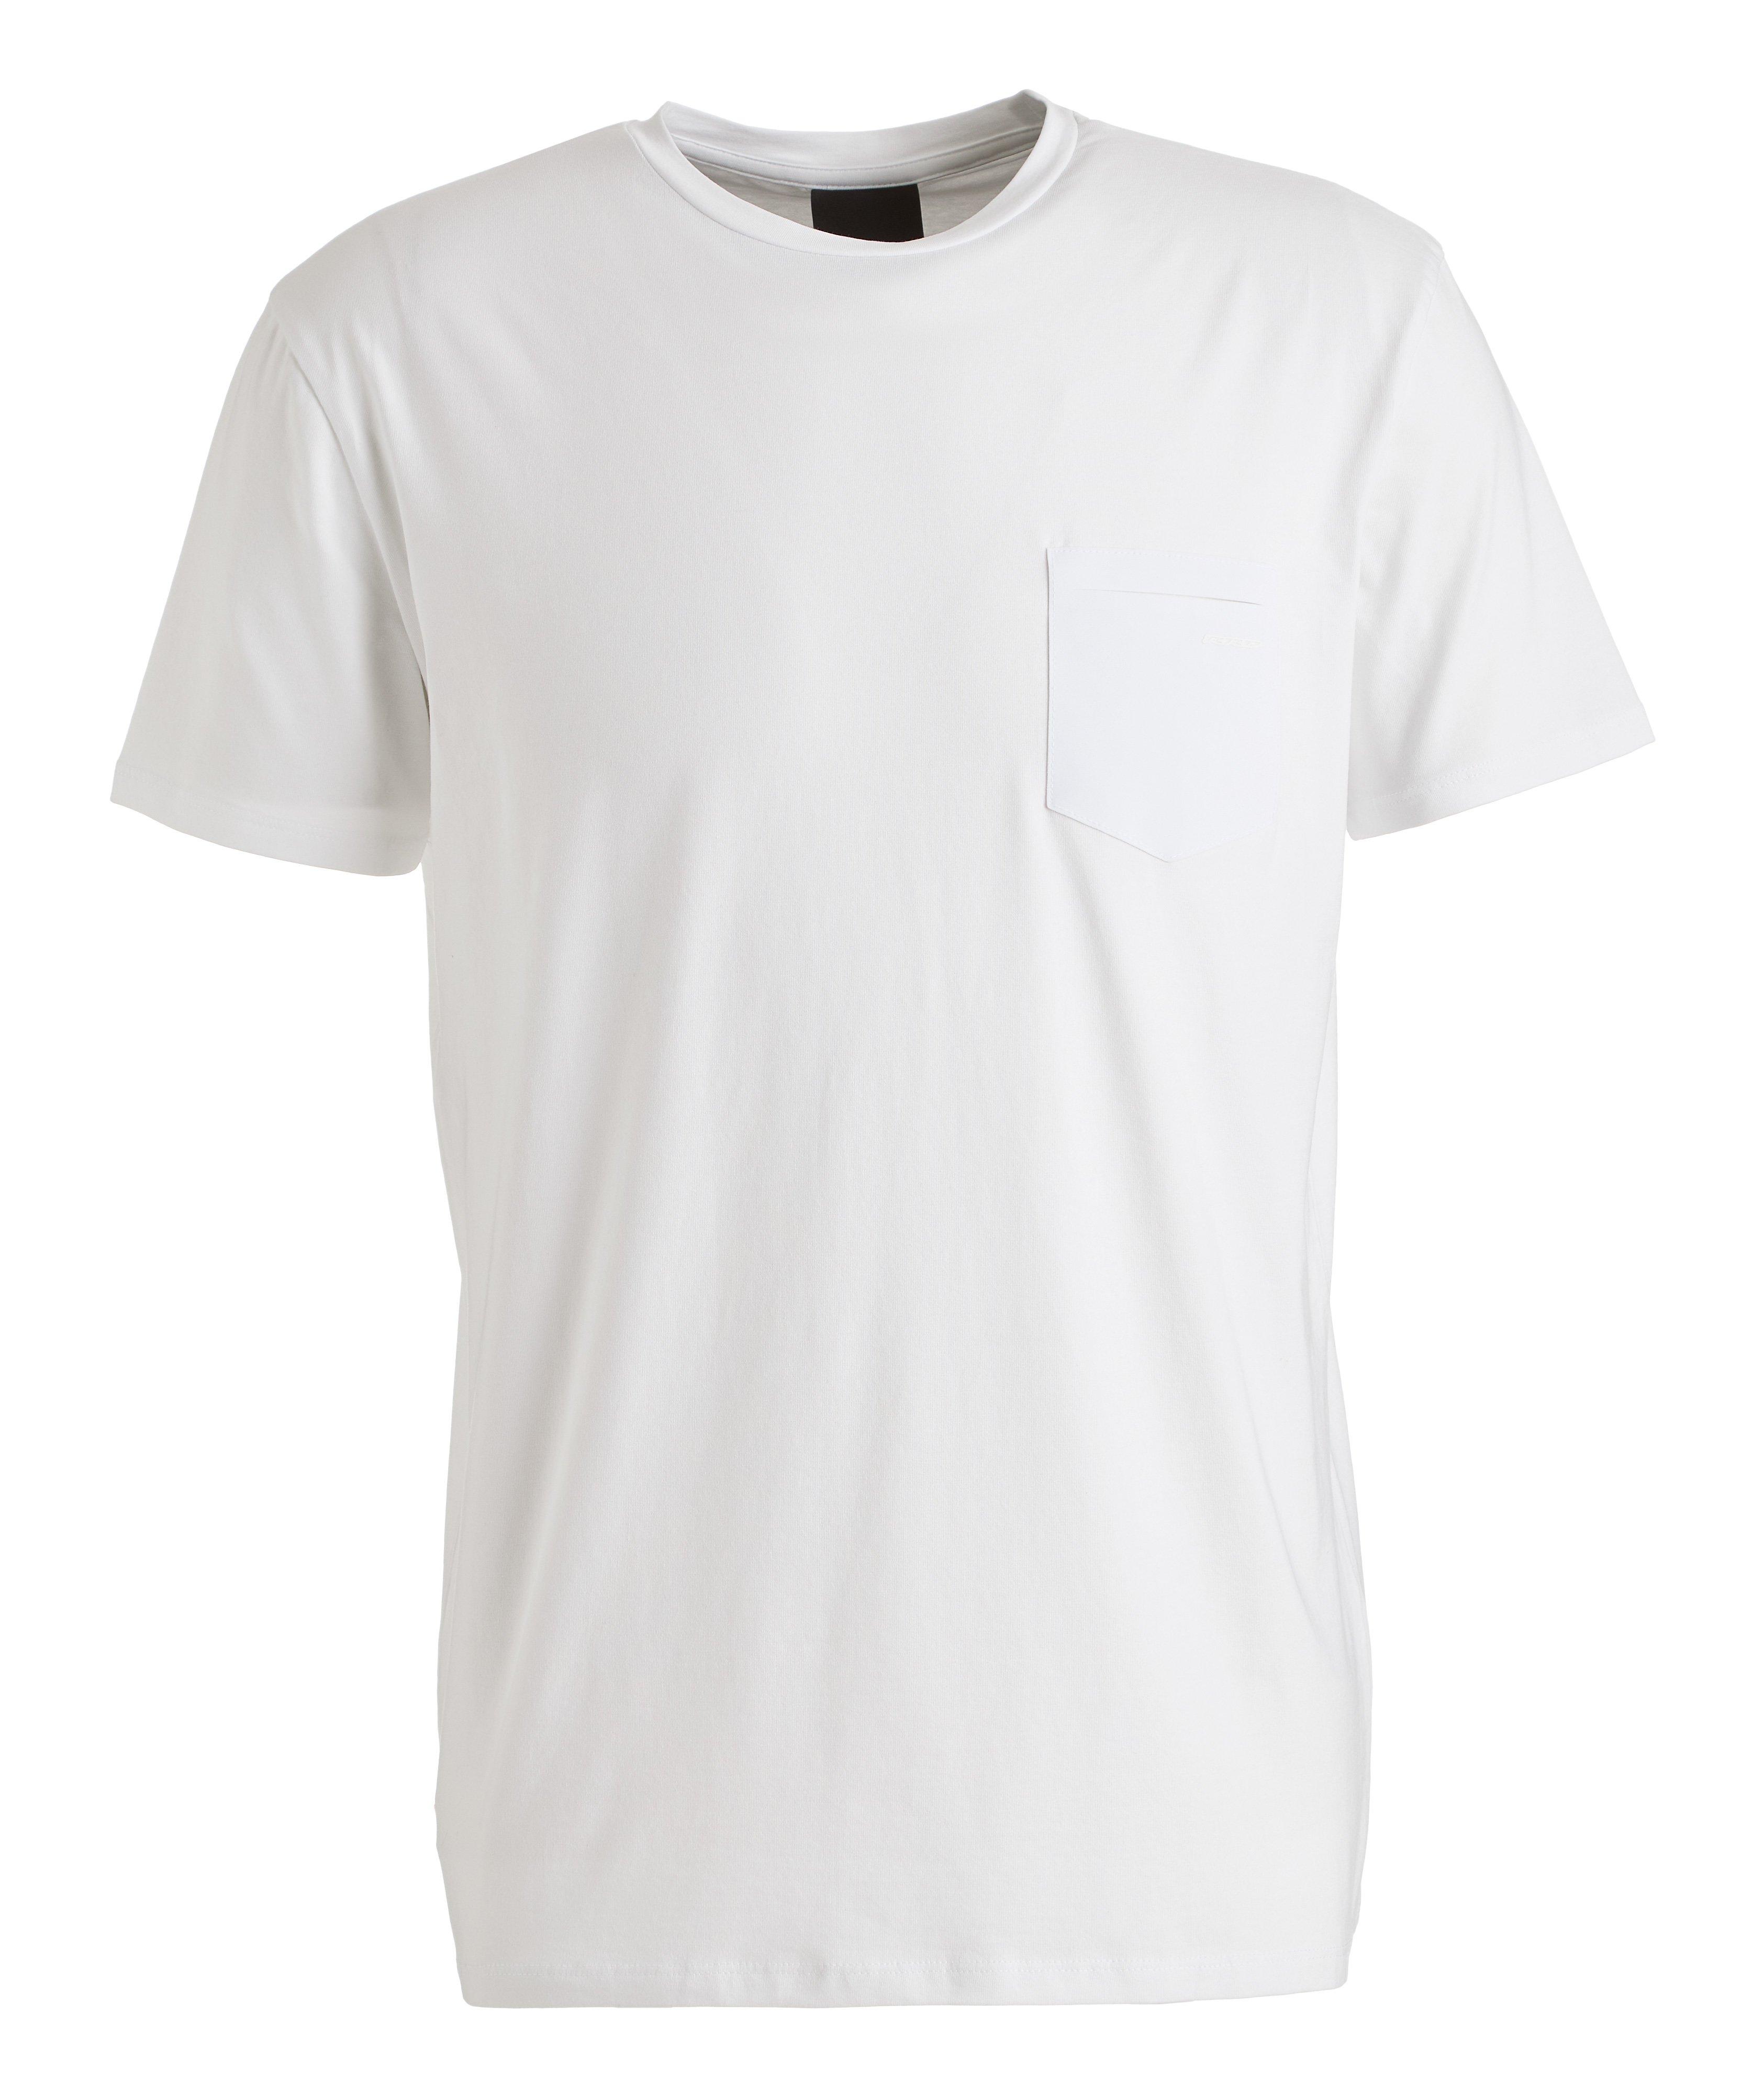 Stretch-Cotton Performance T-Shirt image 0